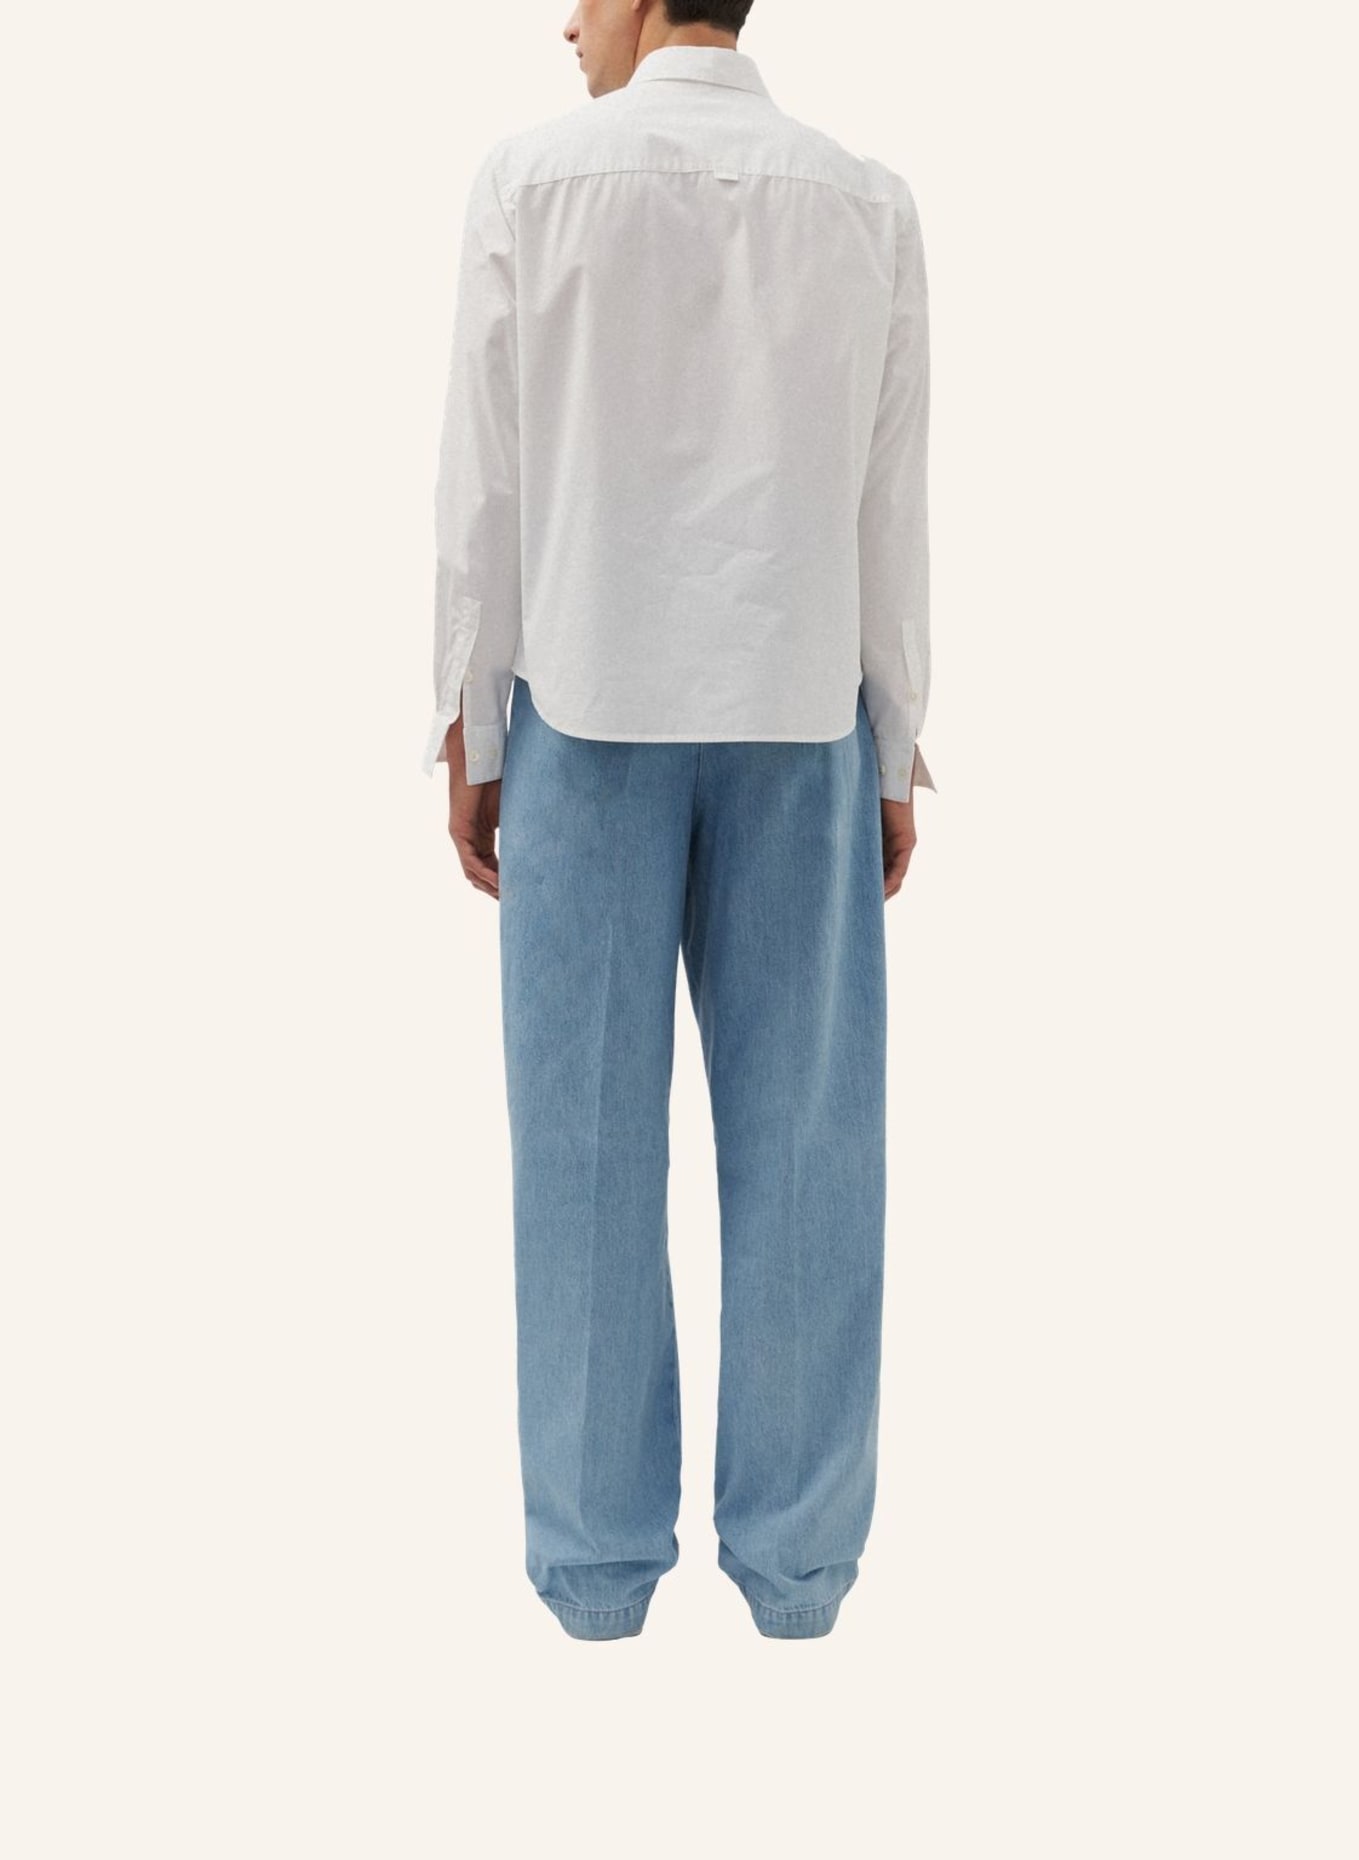 studio seidensticker Casual Hemd, Hemd Regular Fit, Farbe: WEISS (Bild 3)